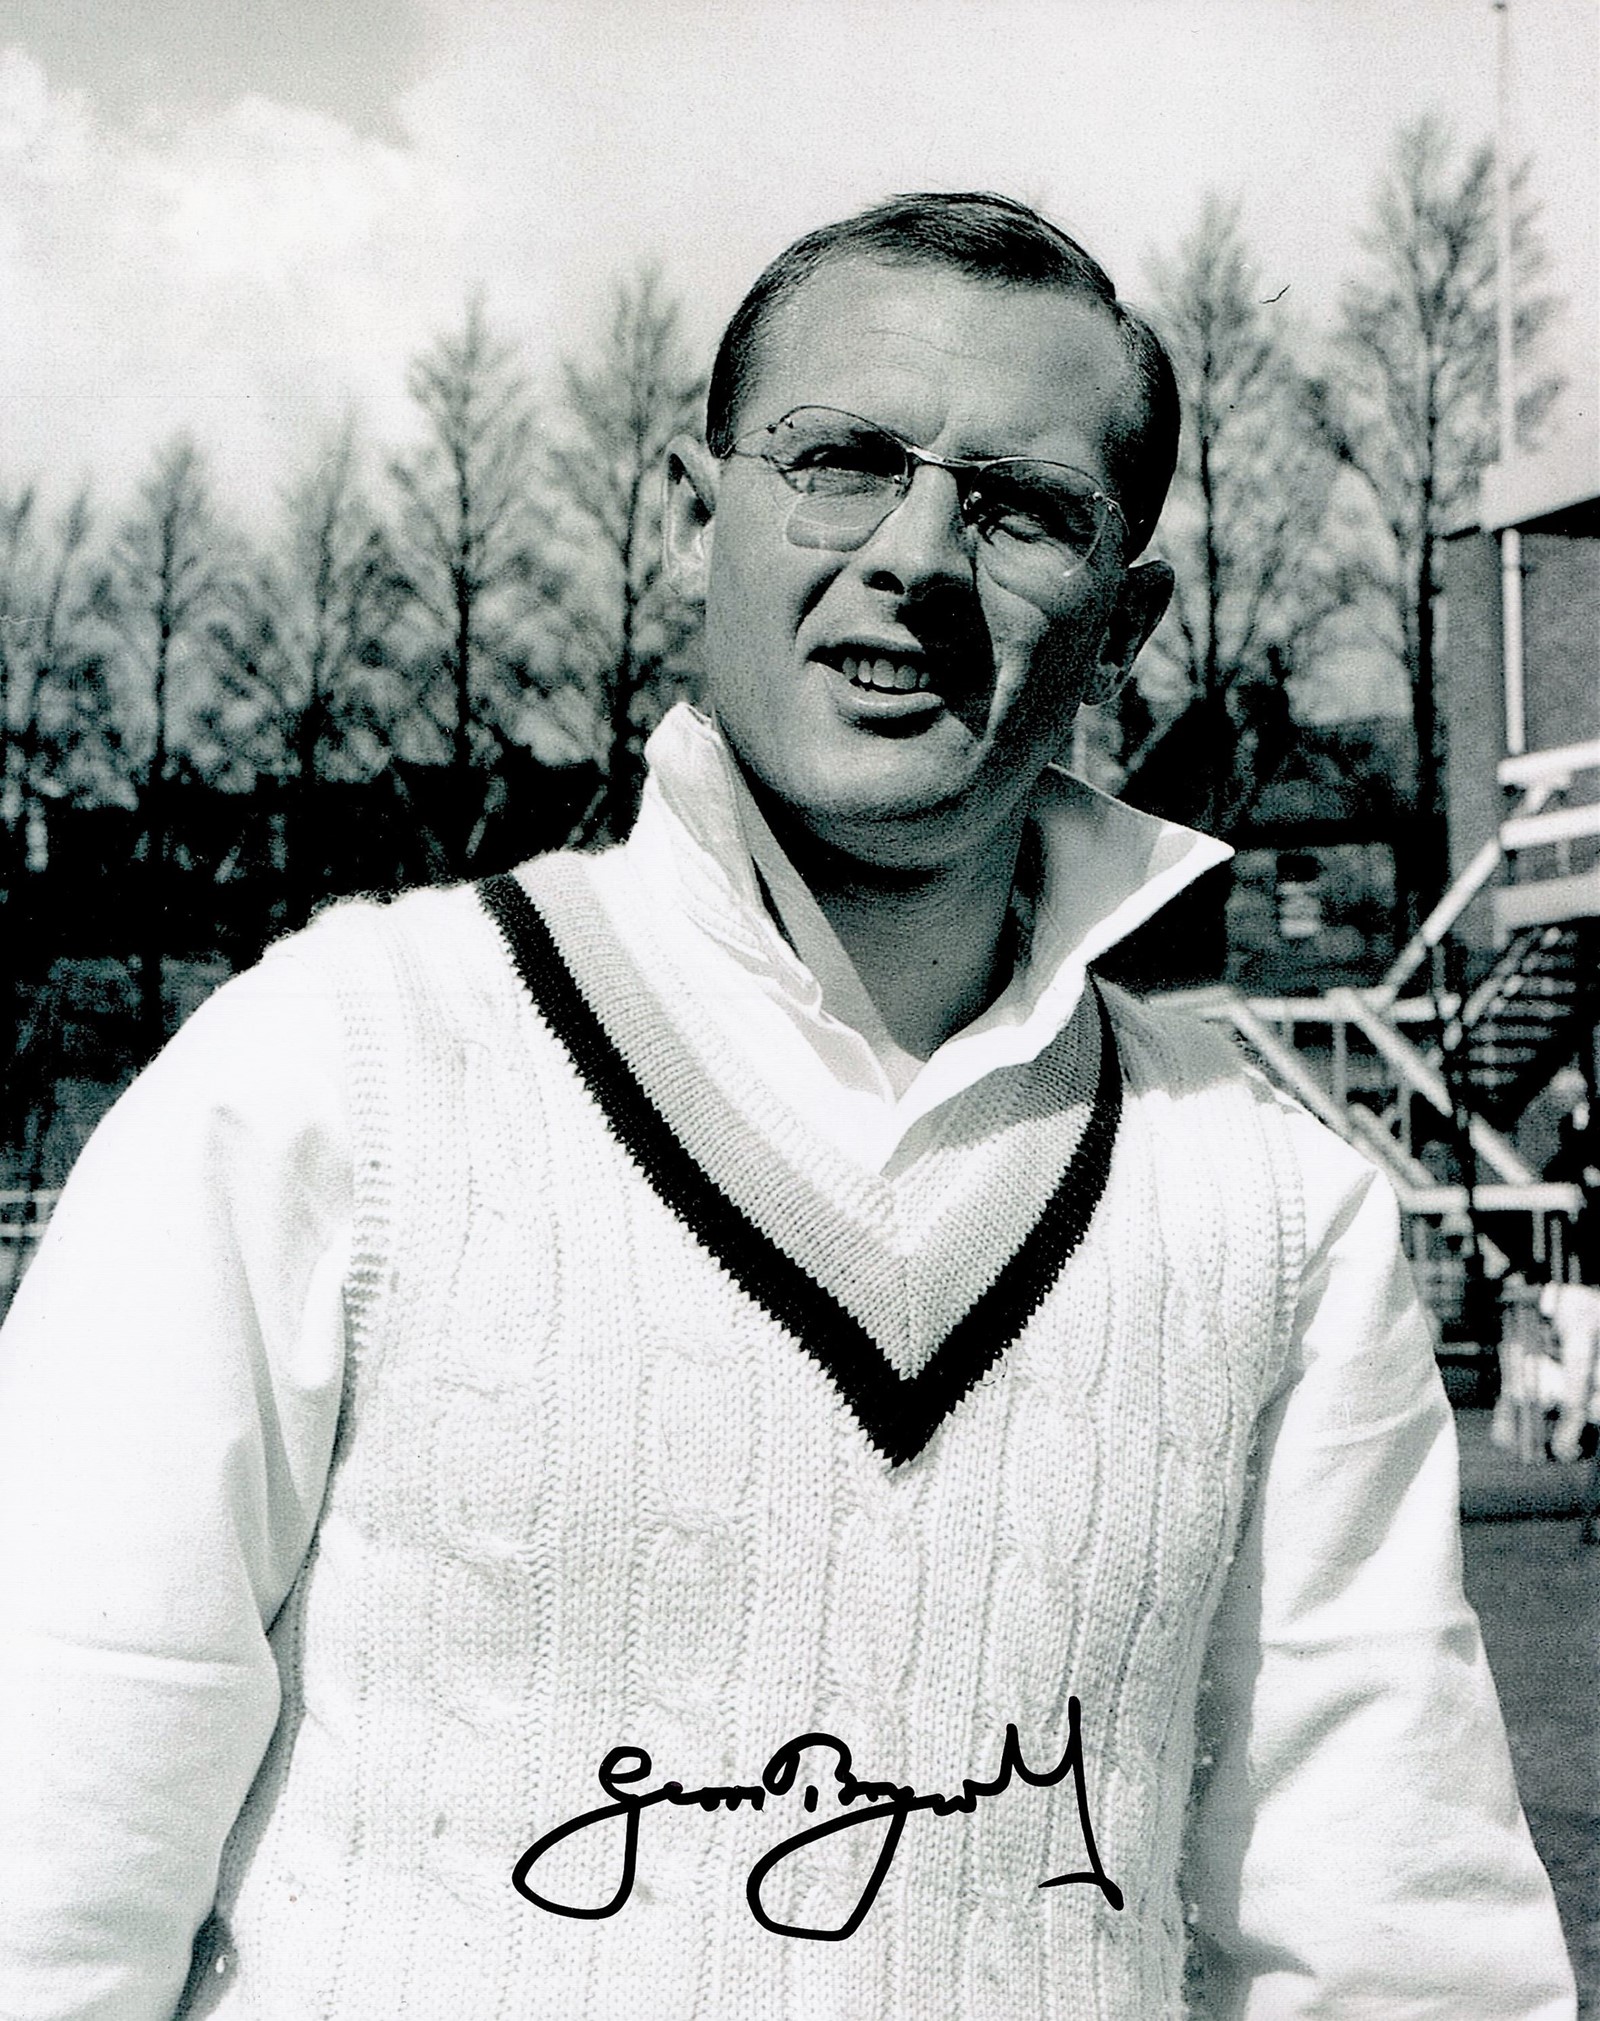 Cricket Geoffrey Boycott signed Yorkshire 10x8 vintage black and white photo.